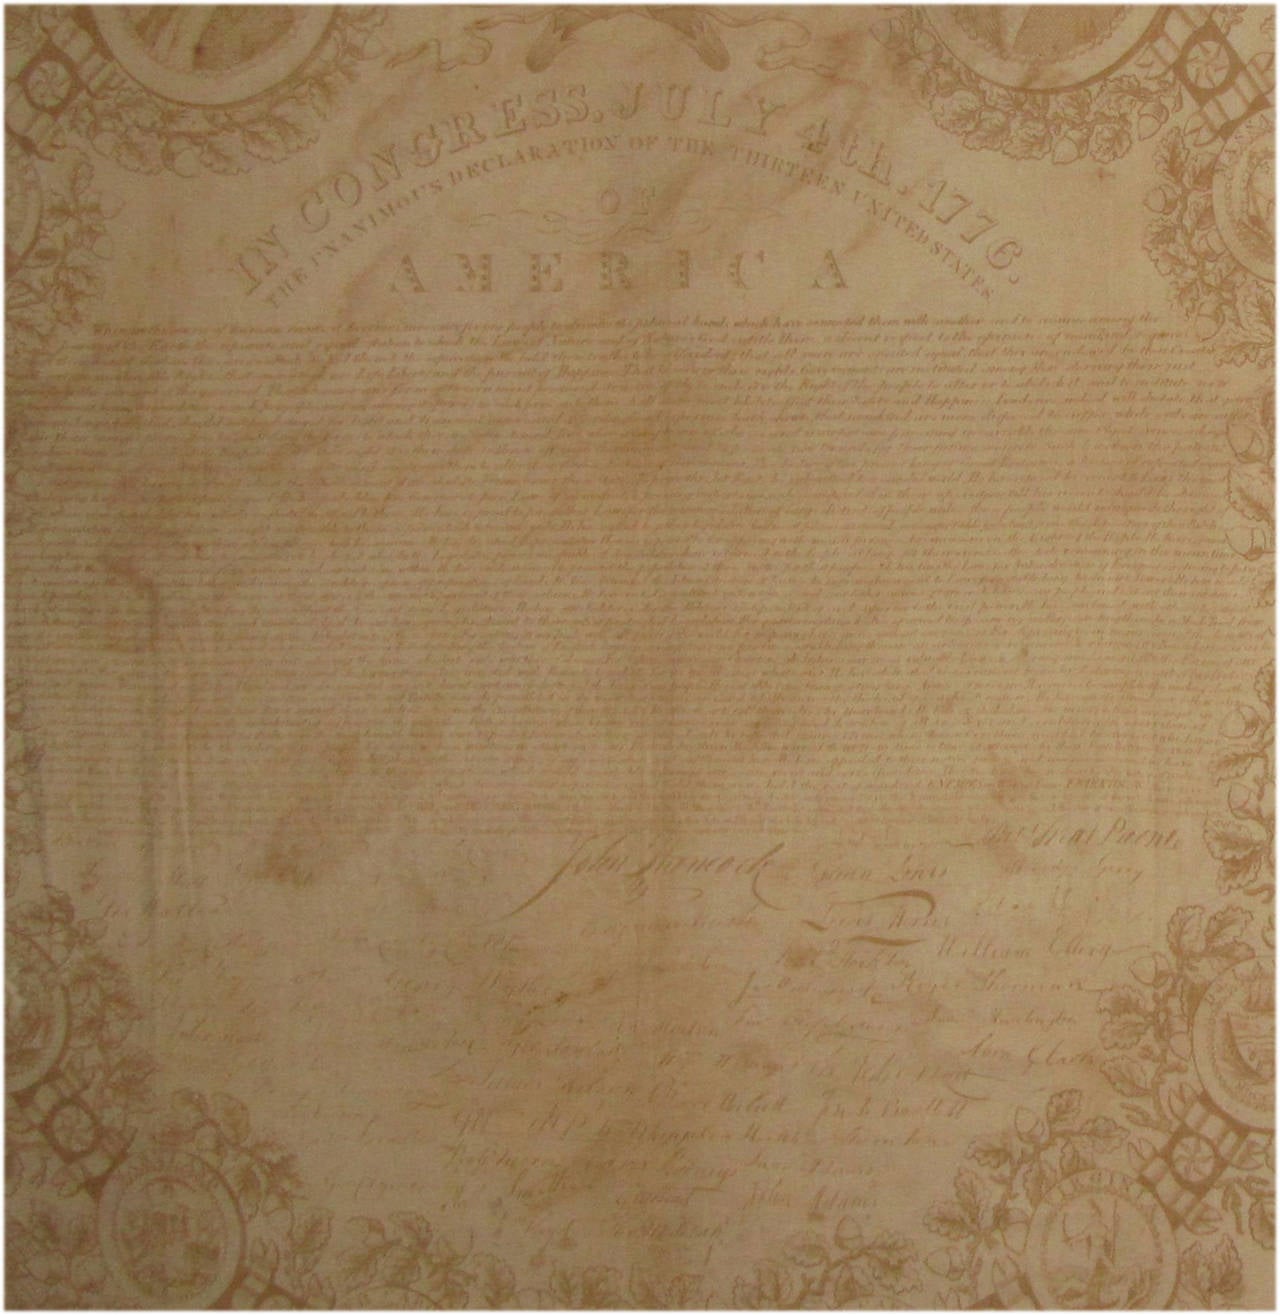 American Rare 1819 Declaration of Independence, John Adams